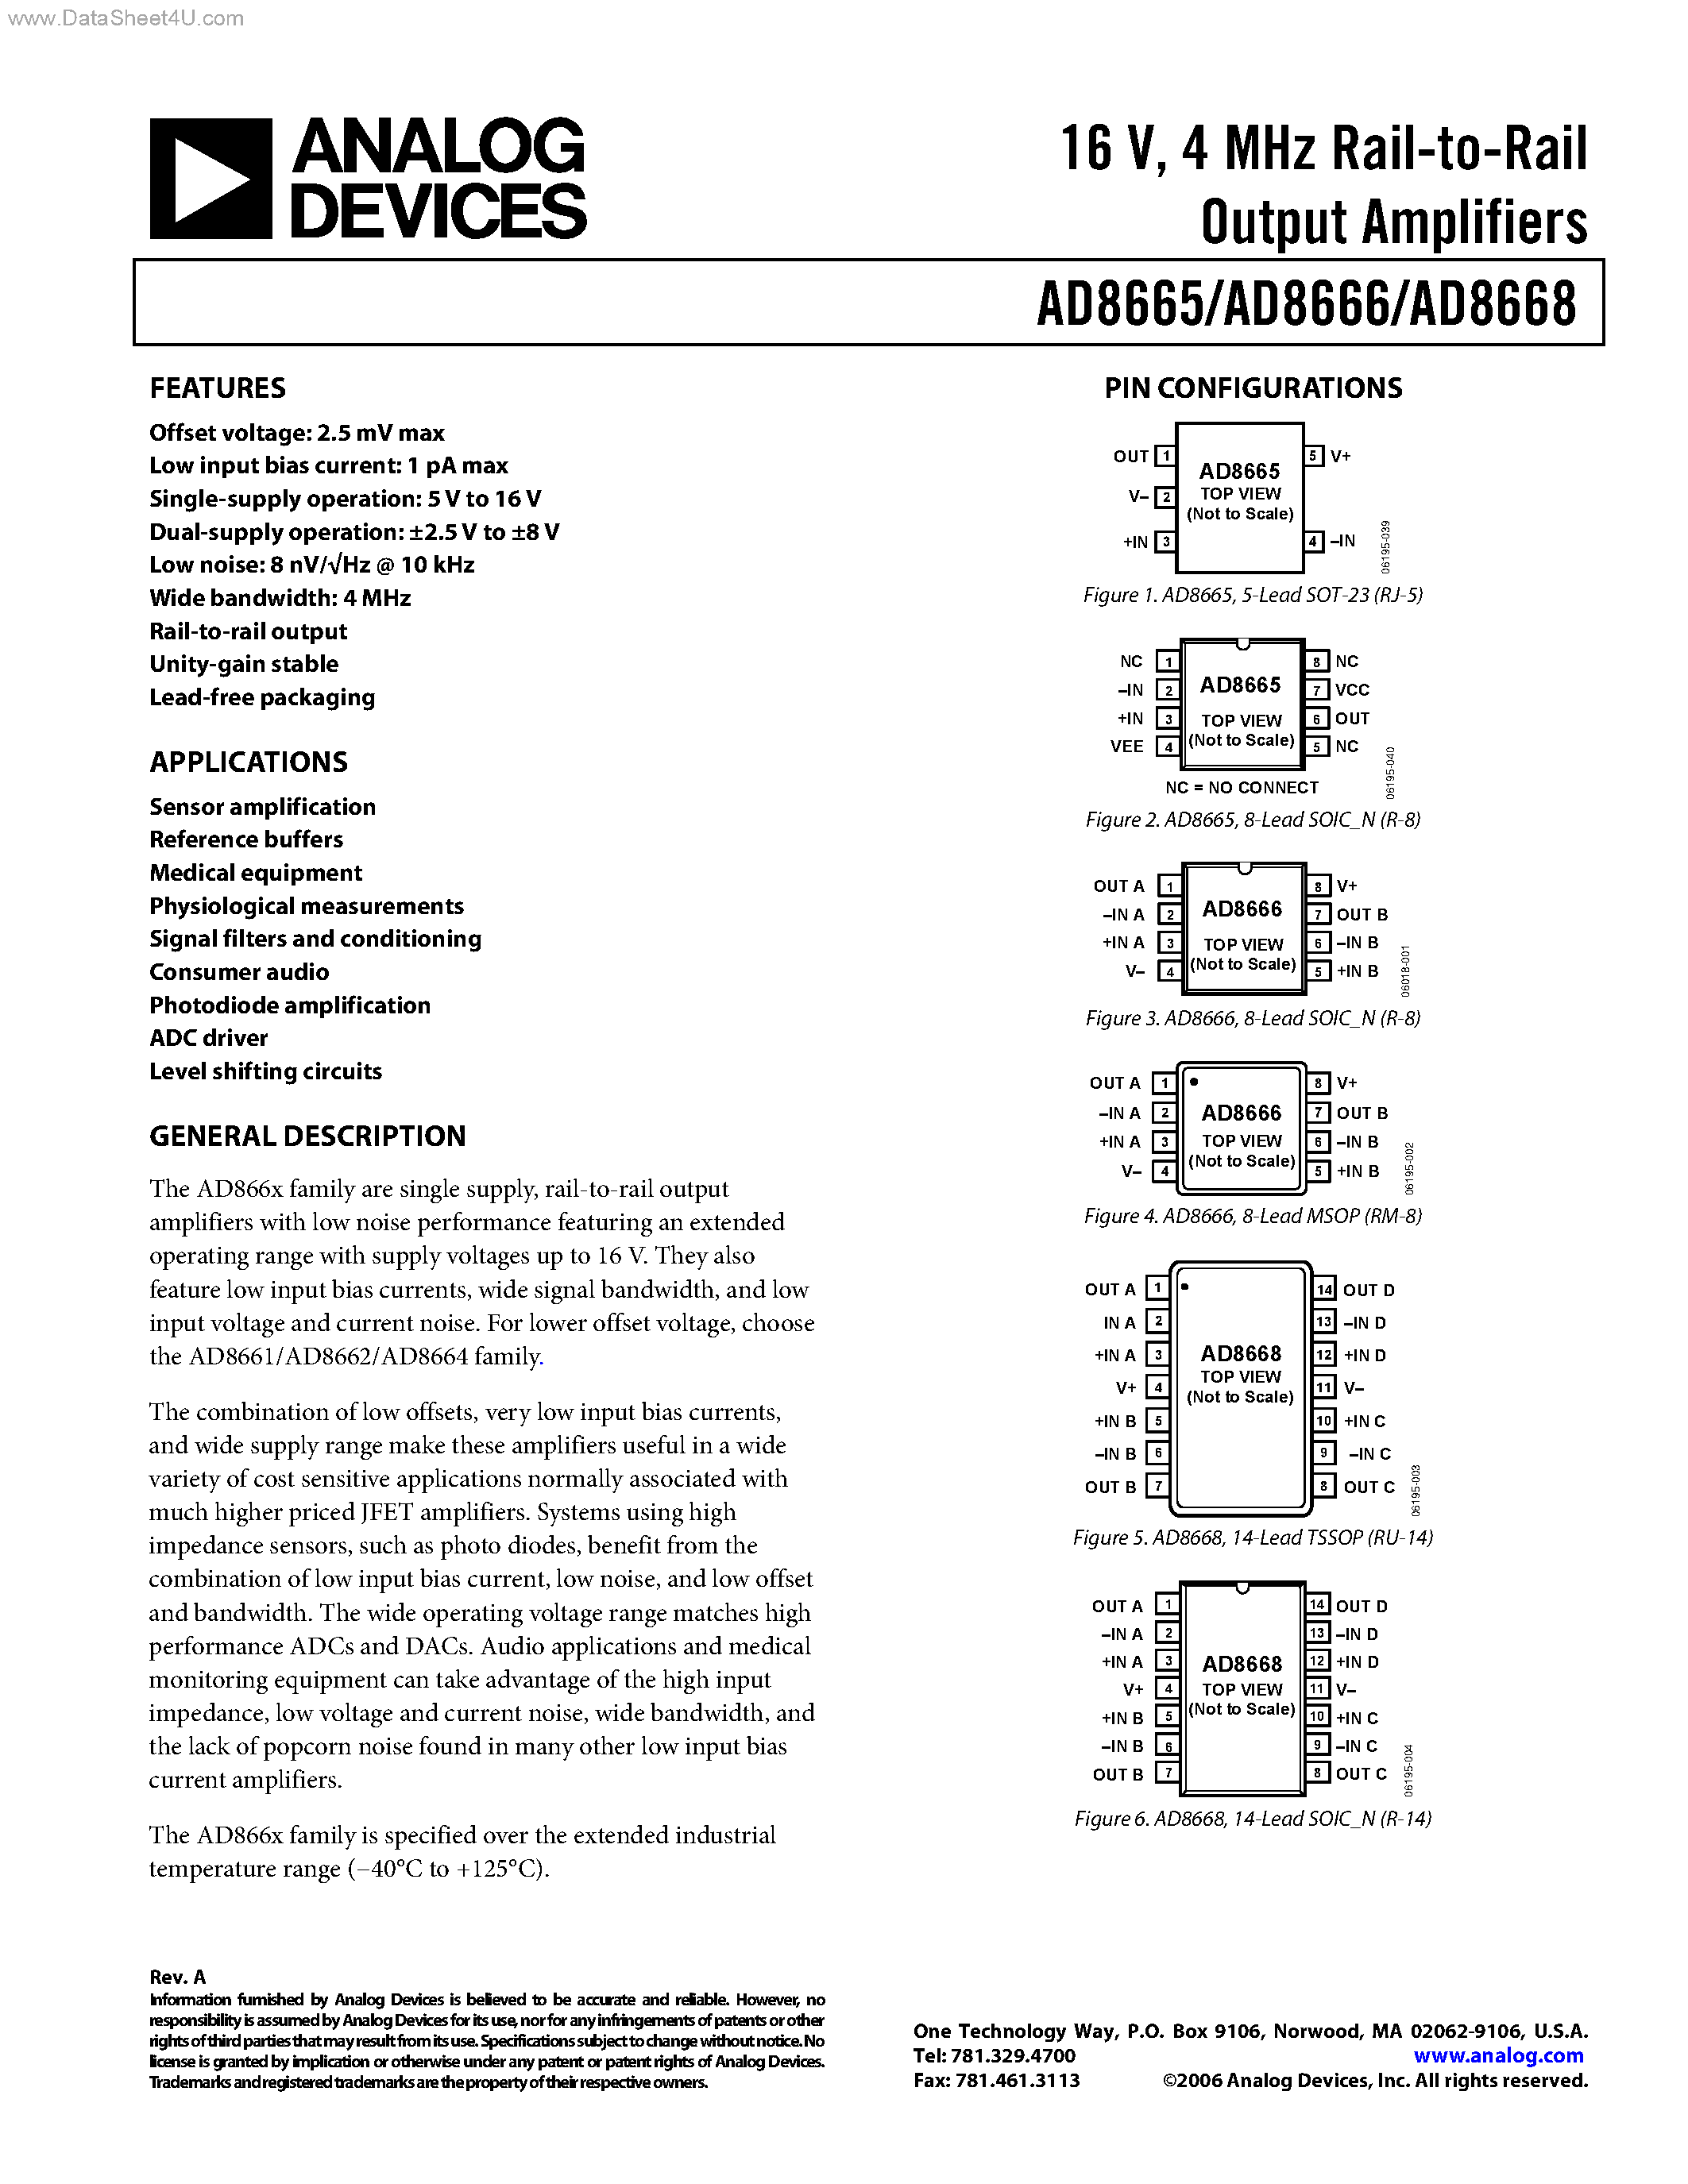 Даташит AD8666 - (AD8666 / AD8668) Rail-to-Rail Output Amplifiers страница 1